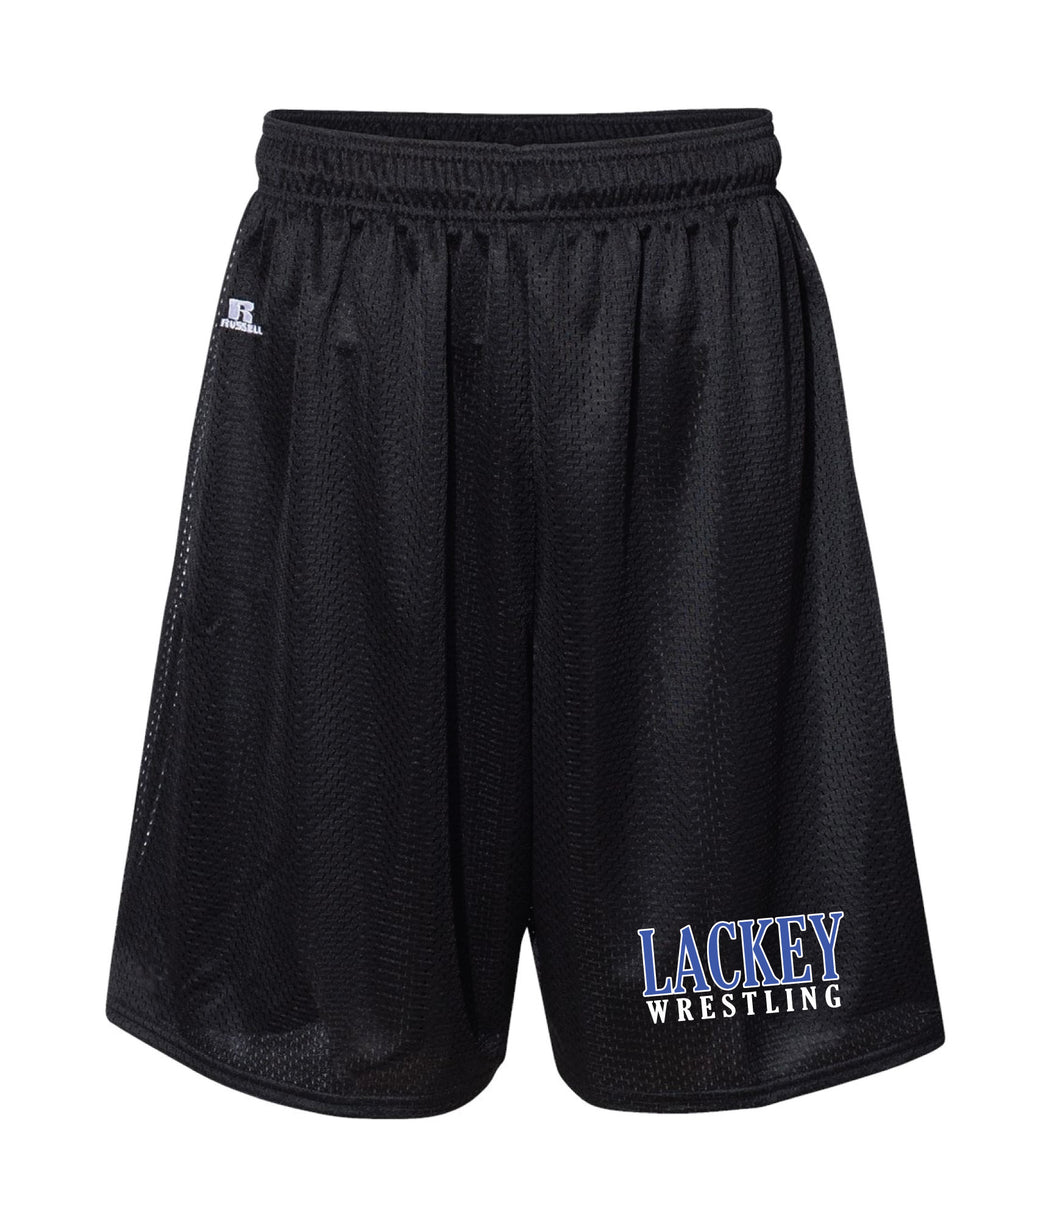 Lackey Wrestling Russell Athletic Tech Shorts - Black - 5KounT2018